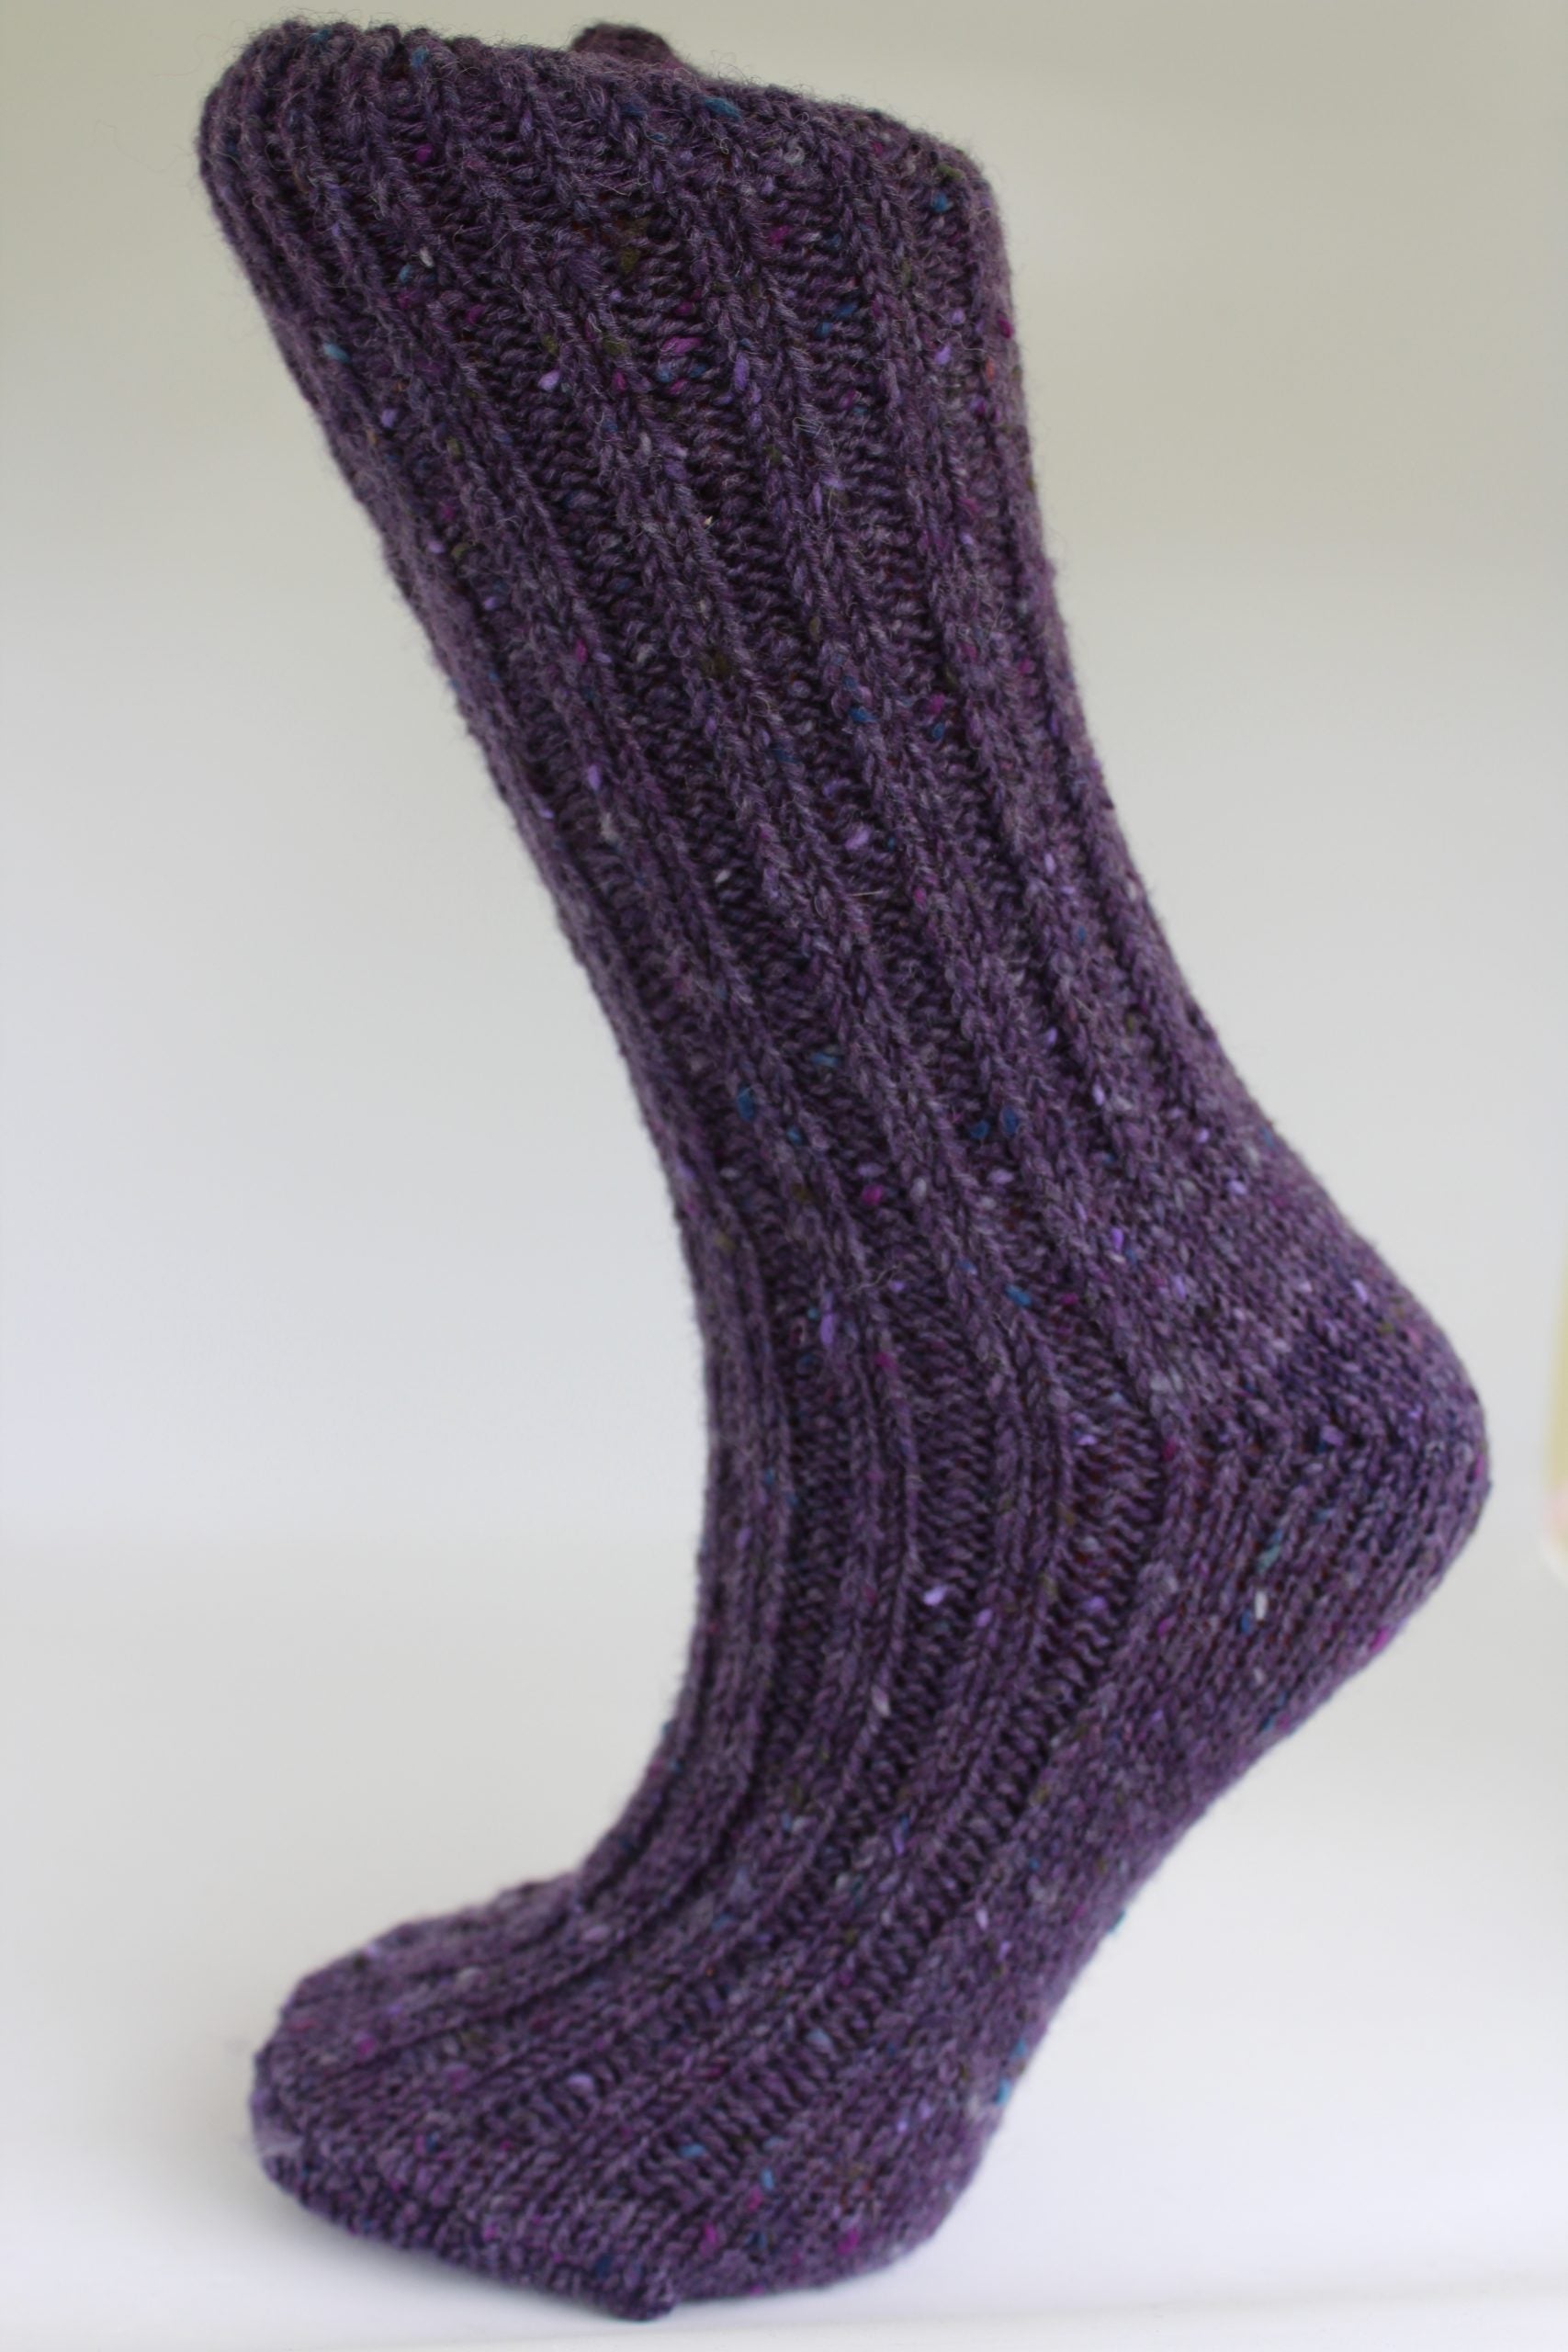 Grange Craft - Irish Country Socks  (Men's / Large)